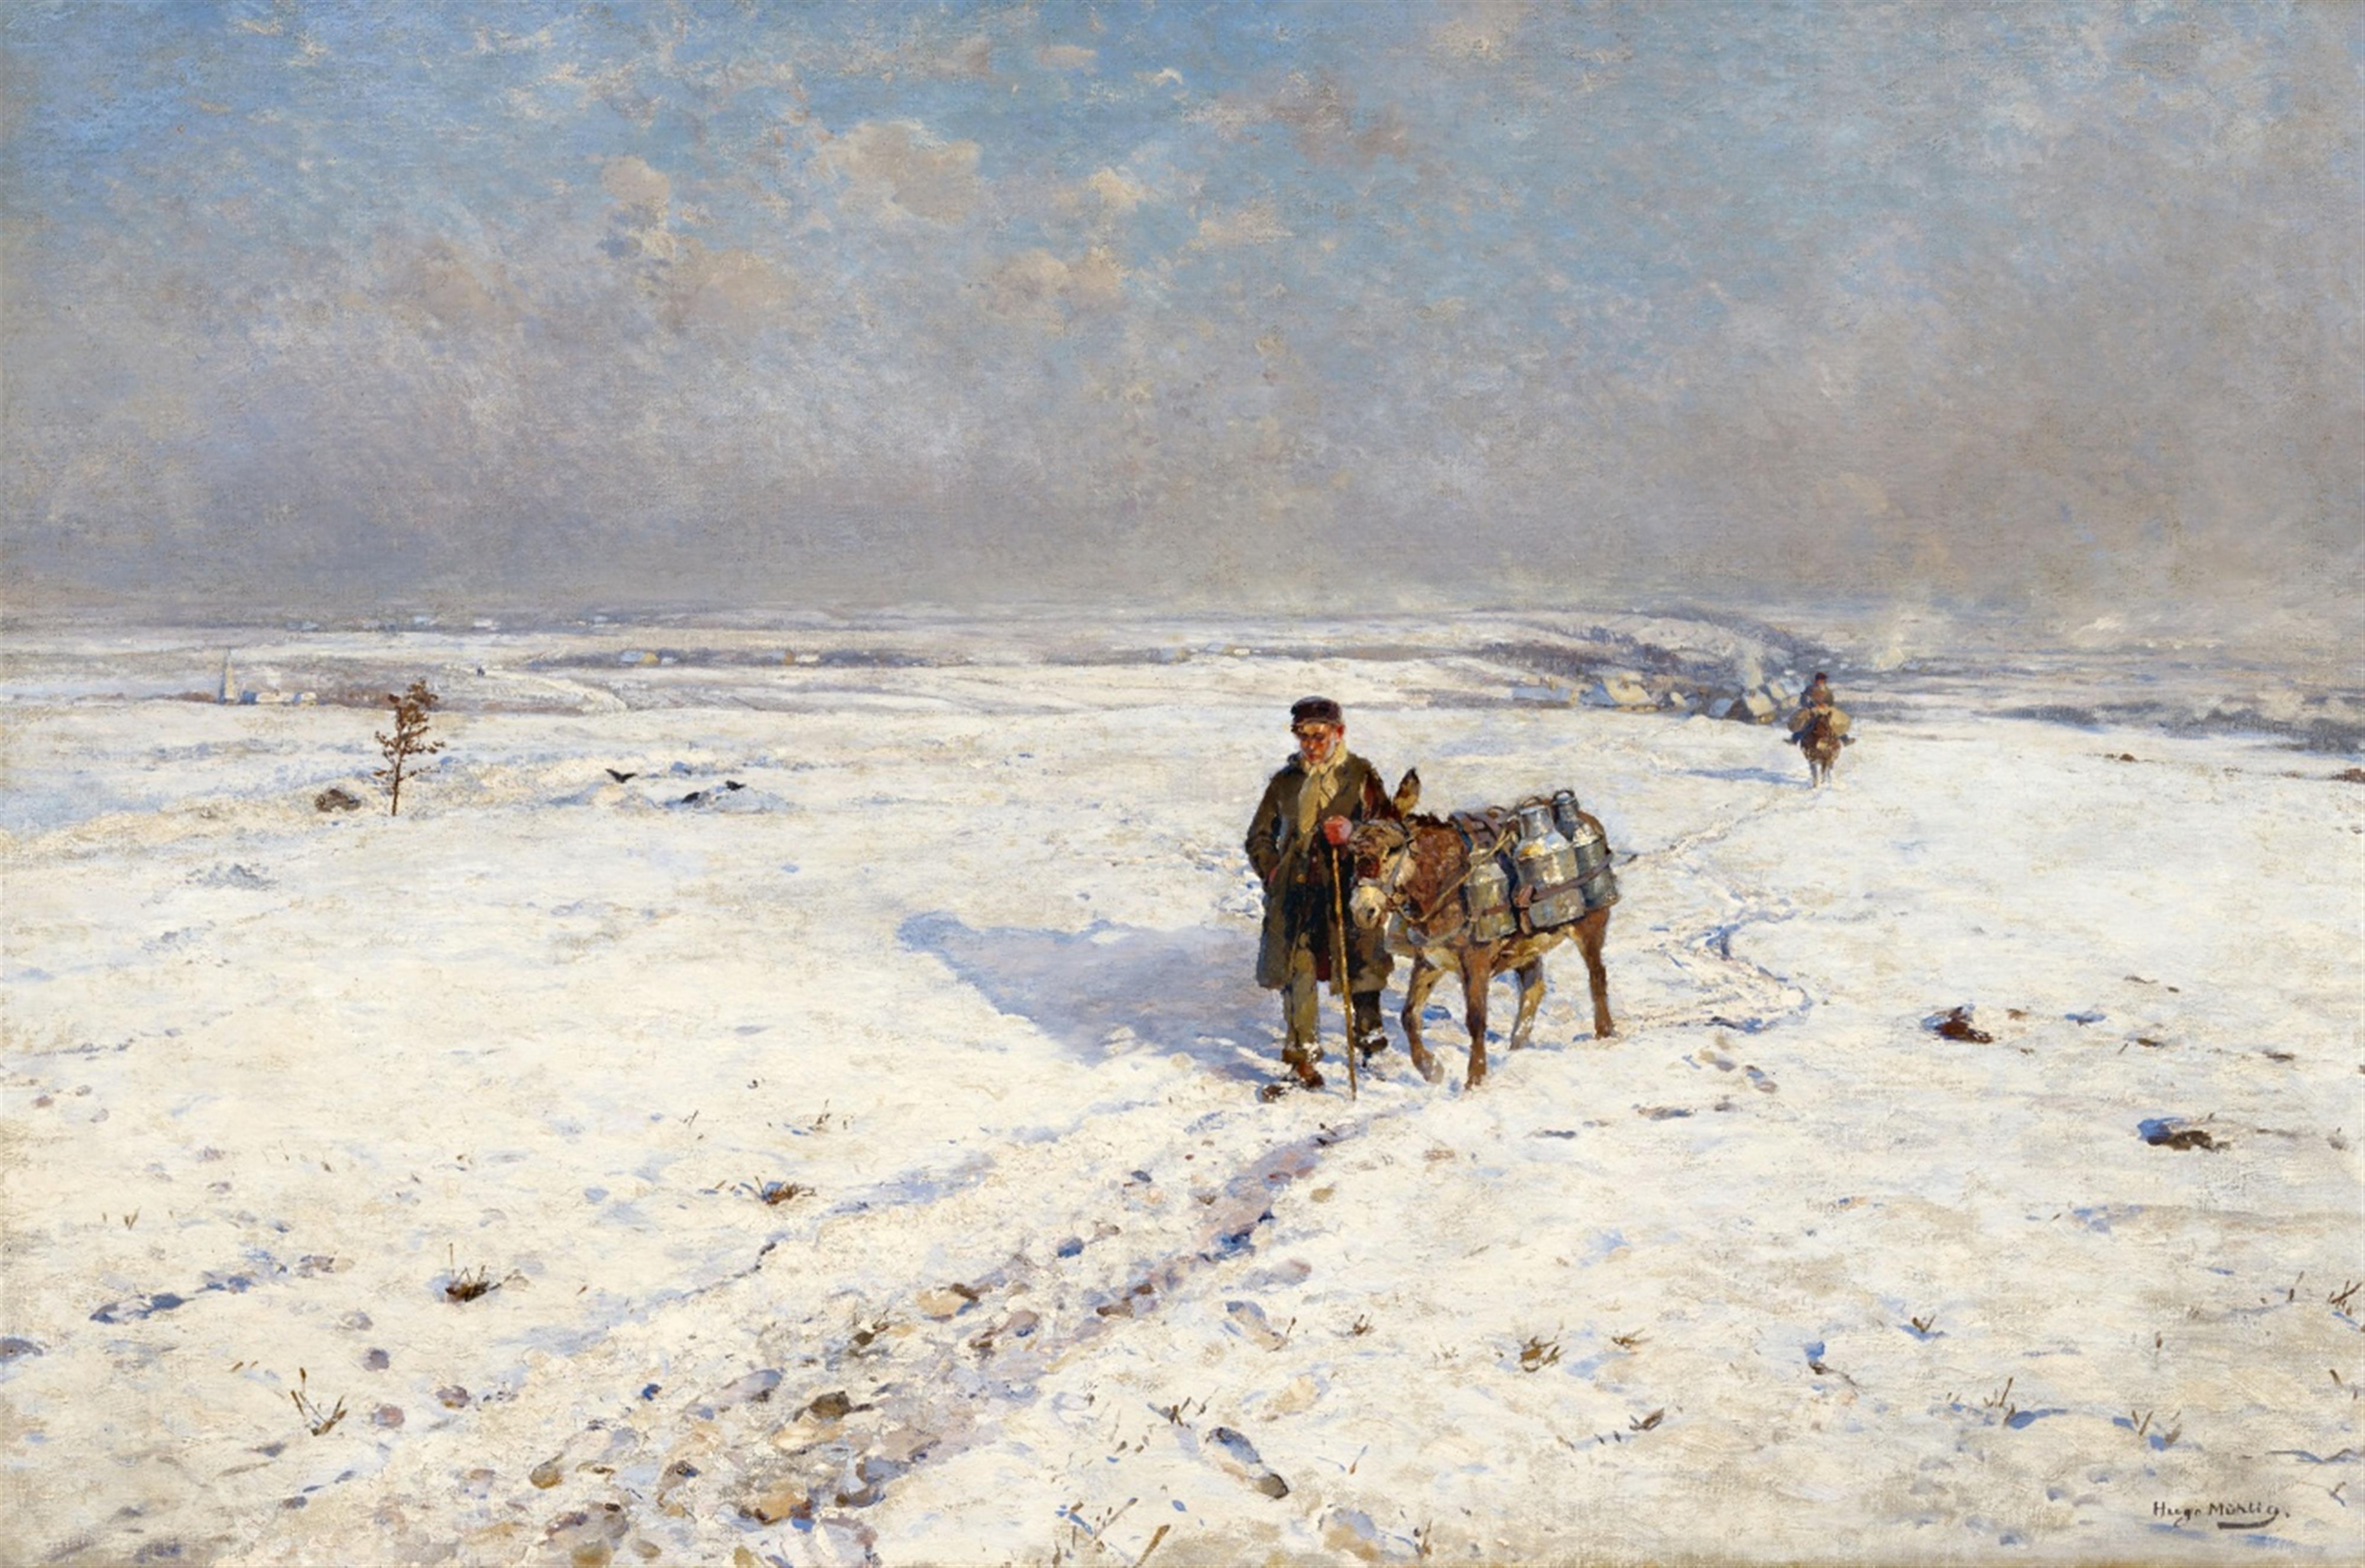 Hugo Mühlig - Winter Landscape with Donkies - image-1